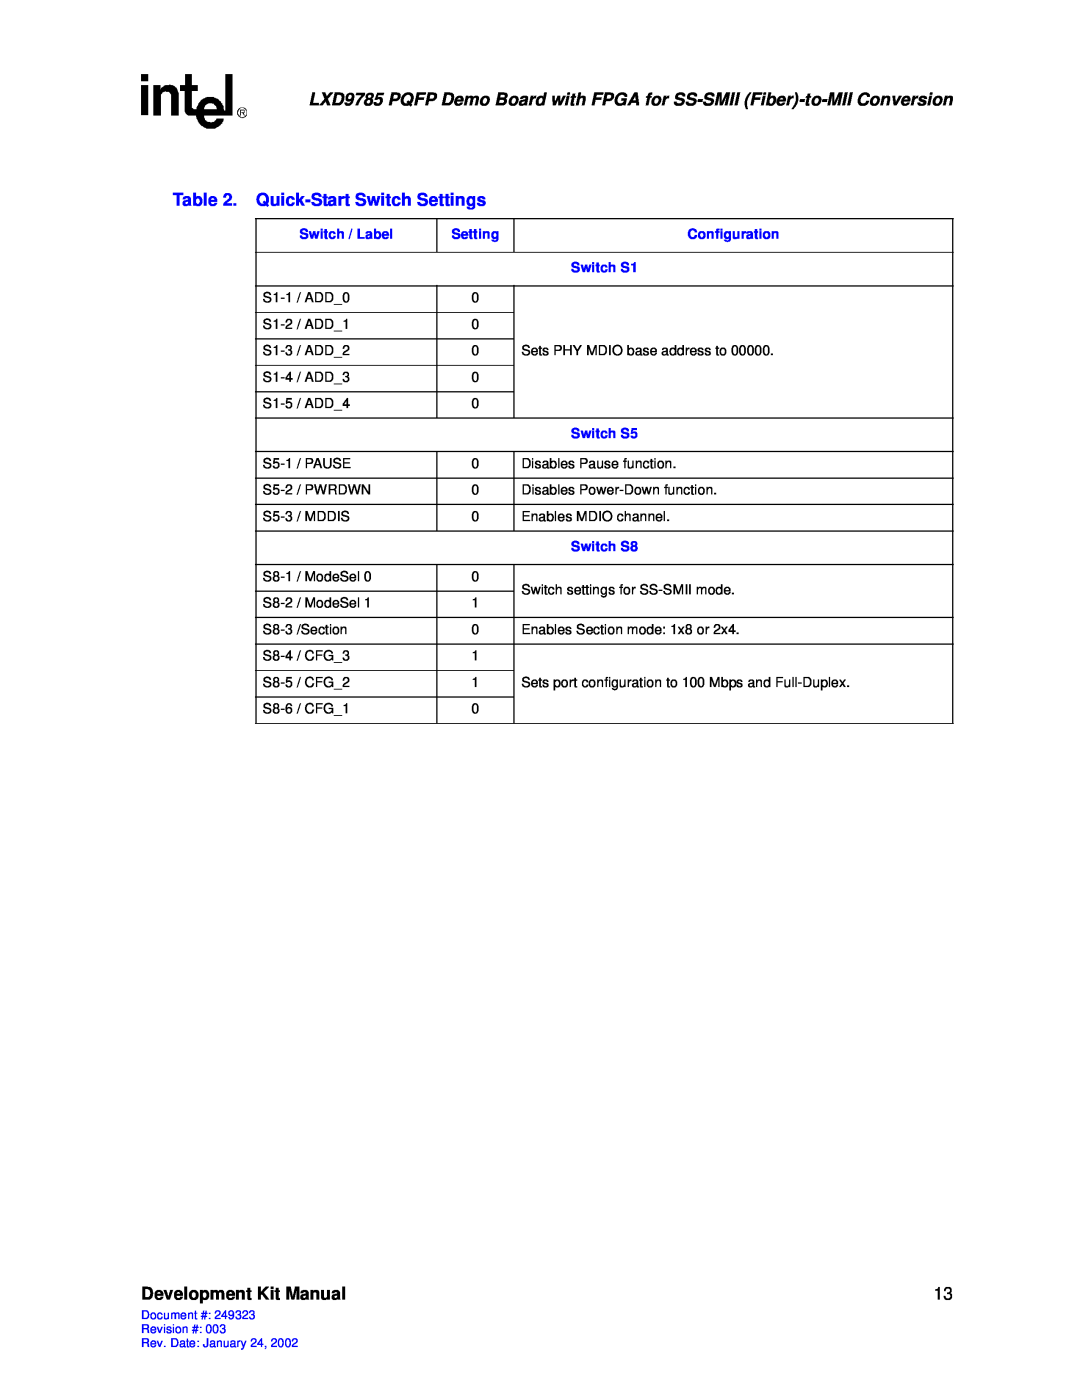 Intel Demo Board with FPGA for SS-SMII (Fiber)-to-MII Conversion manual Quick-Start Switch Settings, Development Kit Manual 